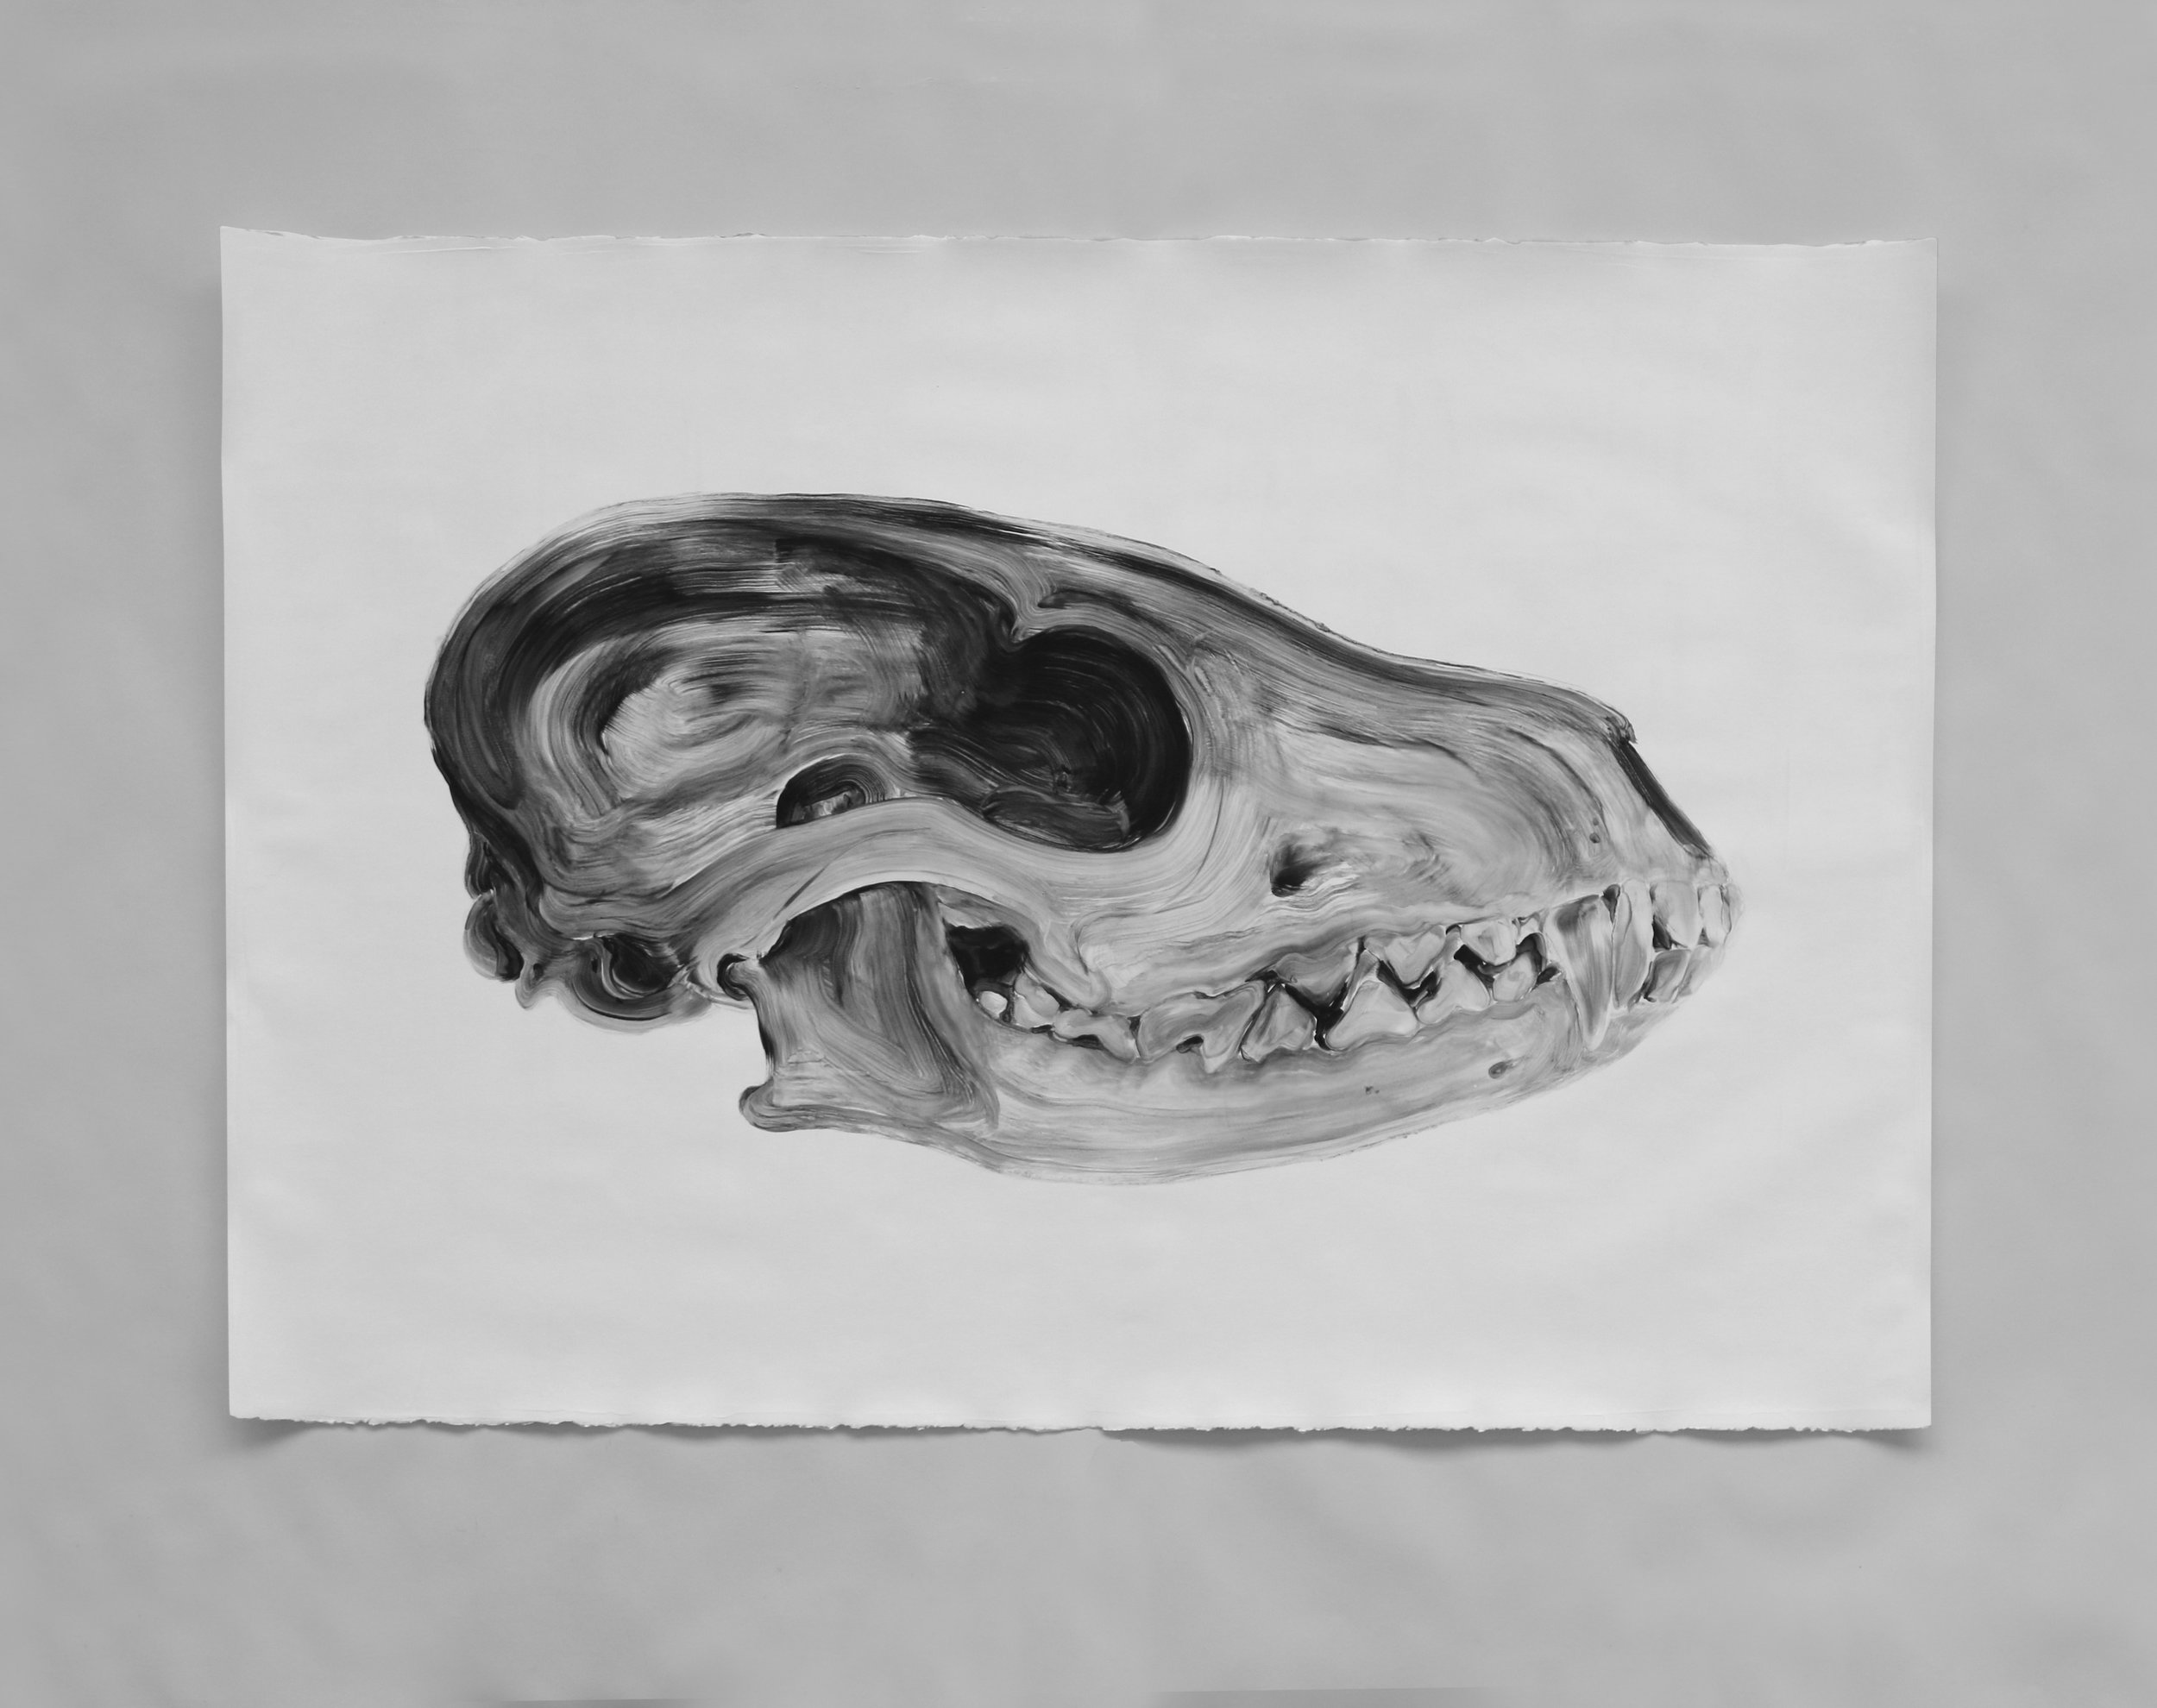  Crâne de renard/ Fox skull  Huile sur papier / Oil on paper  45 X 31 in /&nbsp;114 X 78 cm 